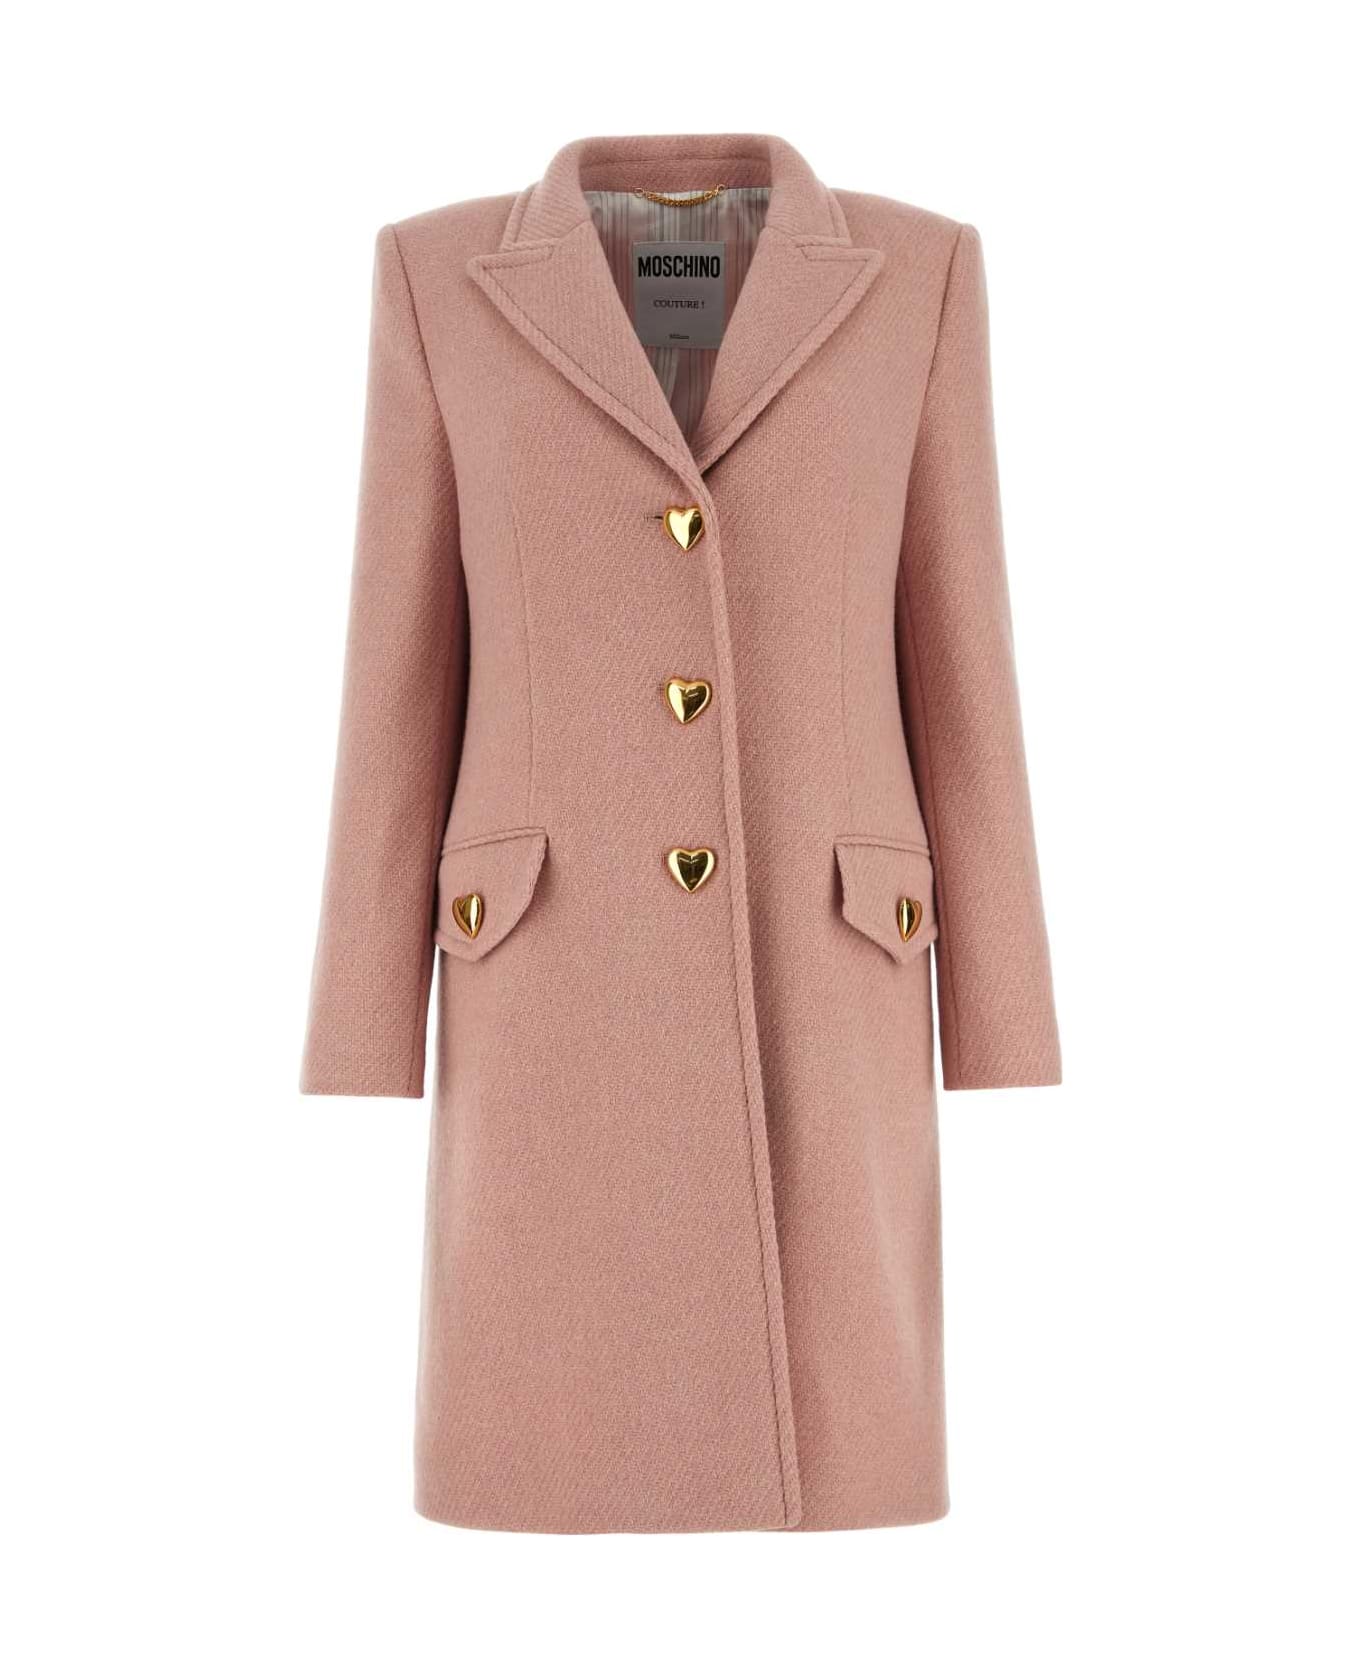 Moschino Powder Pink Wool Blend Coat - 0223 コート